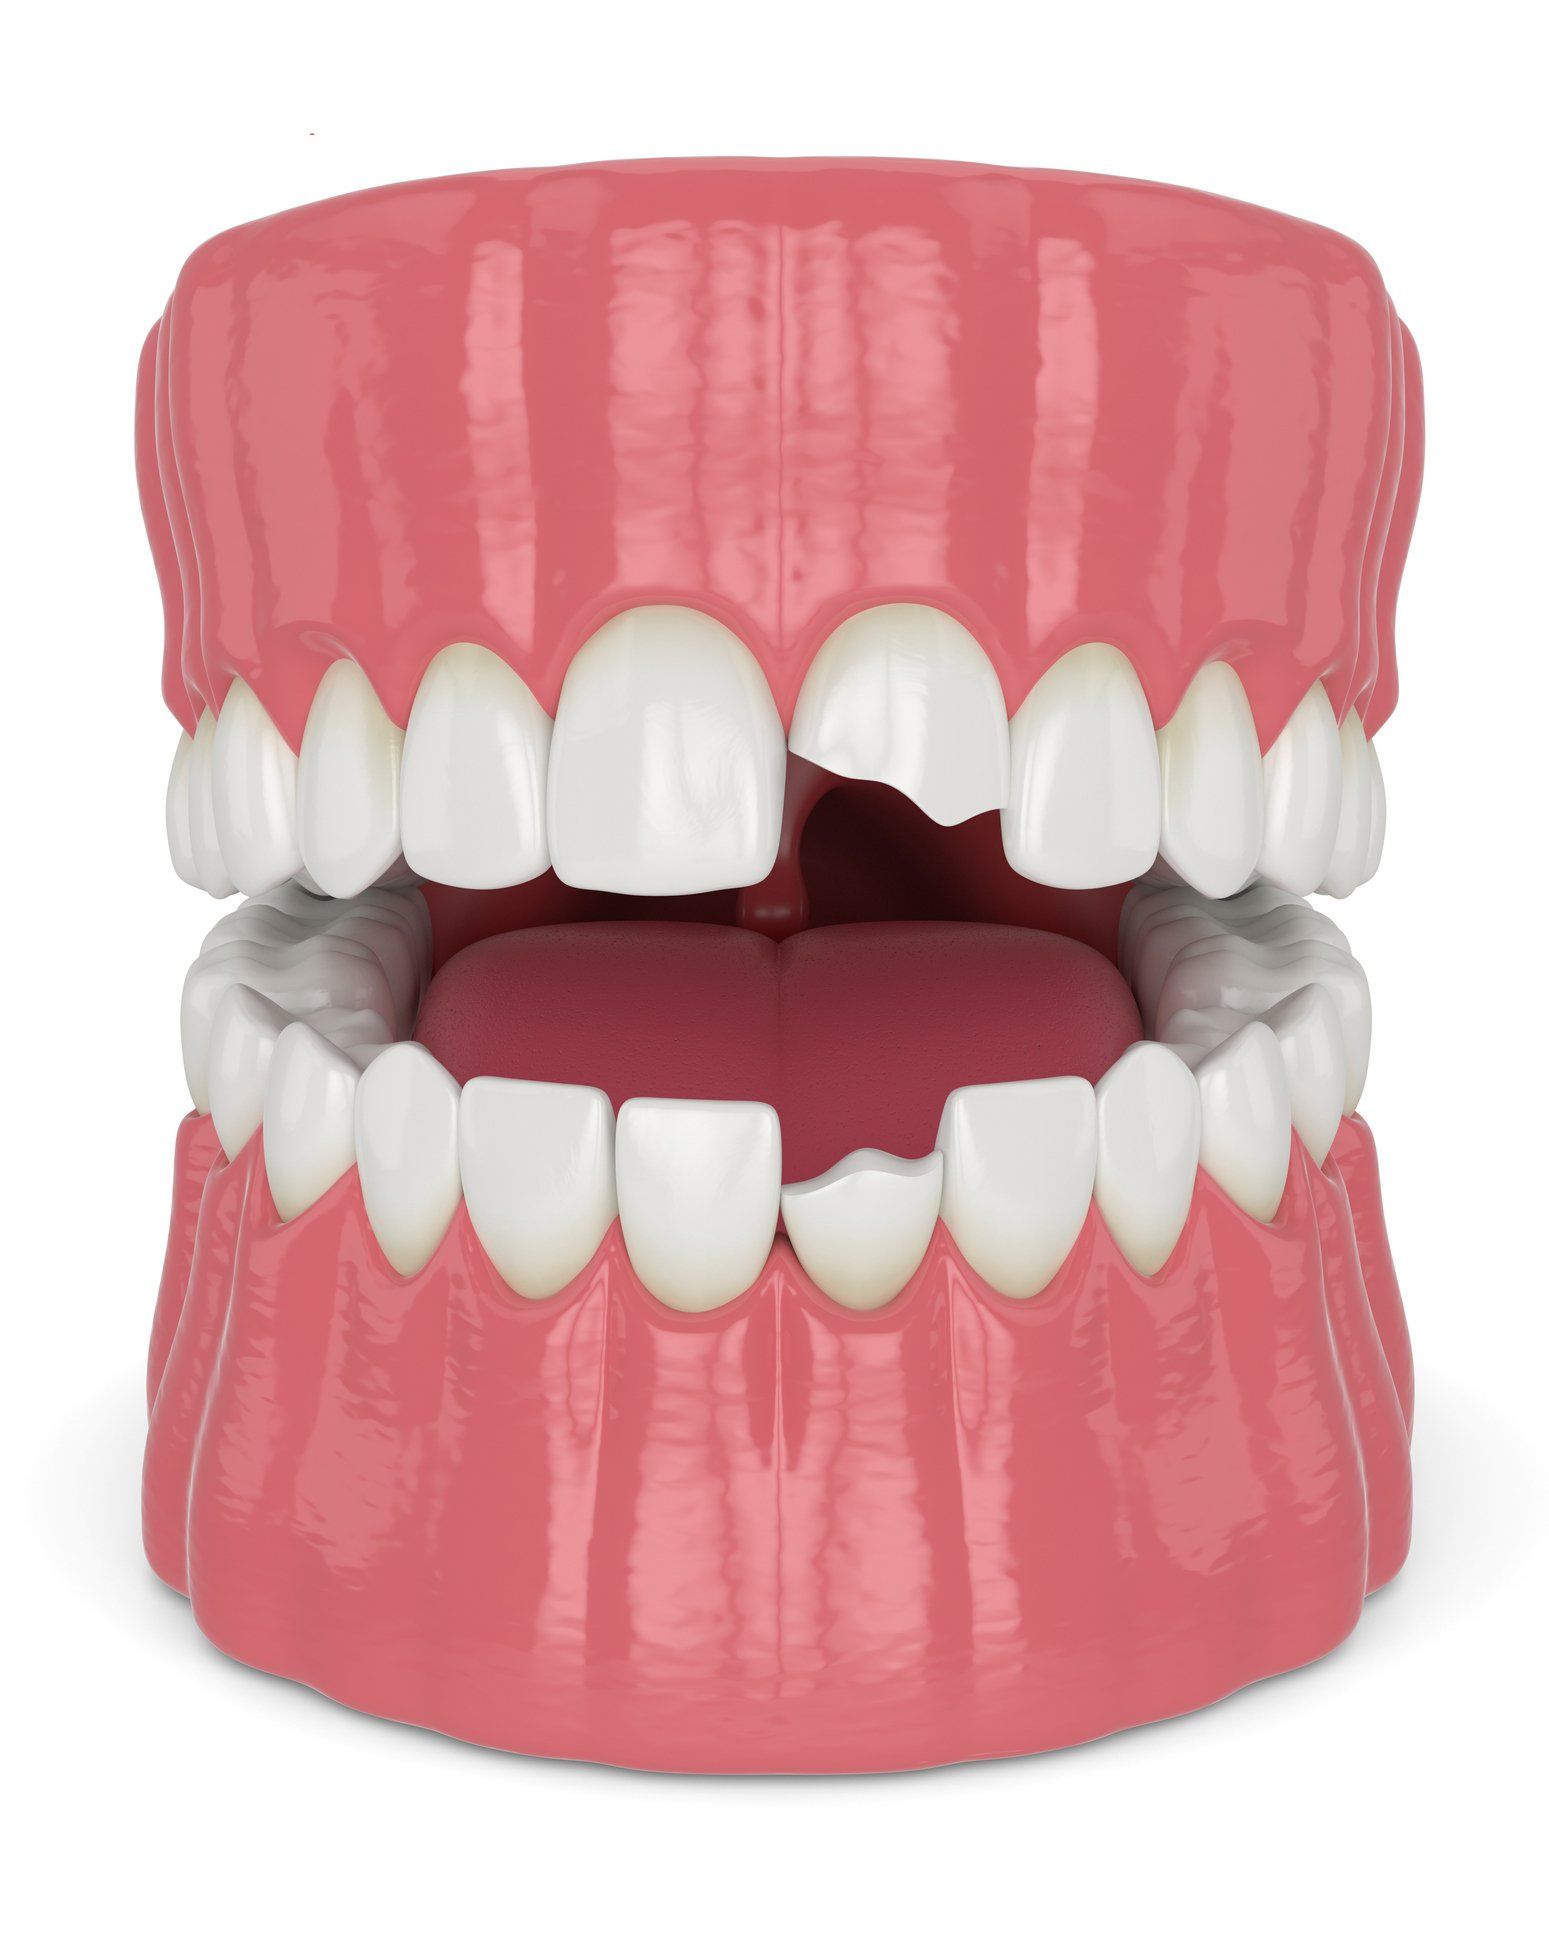 mouth sculpture